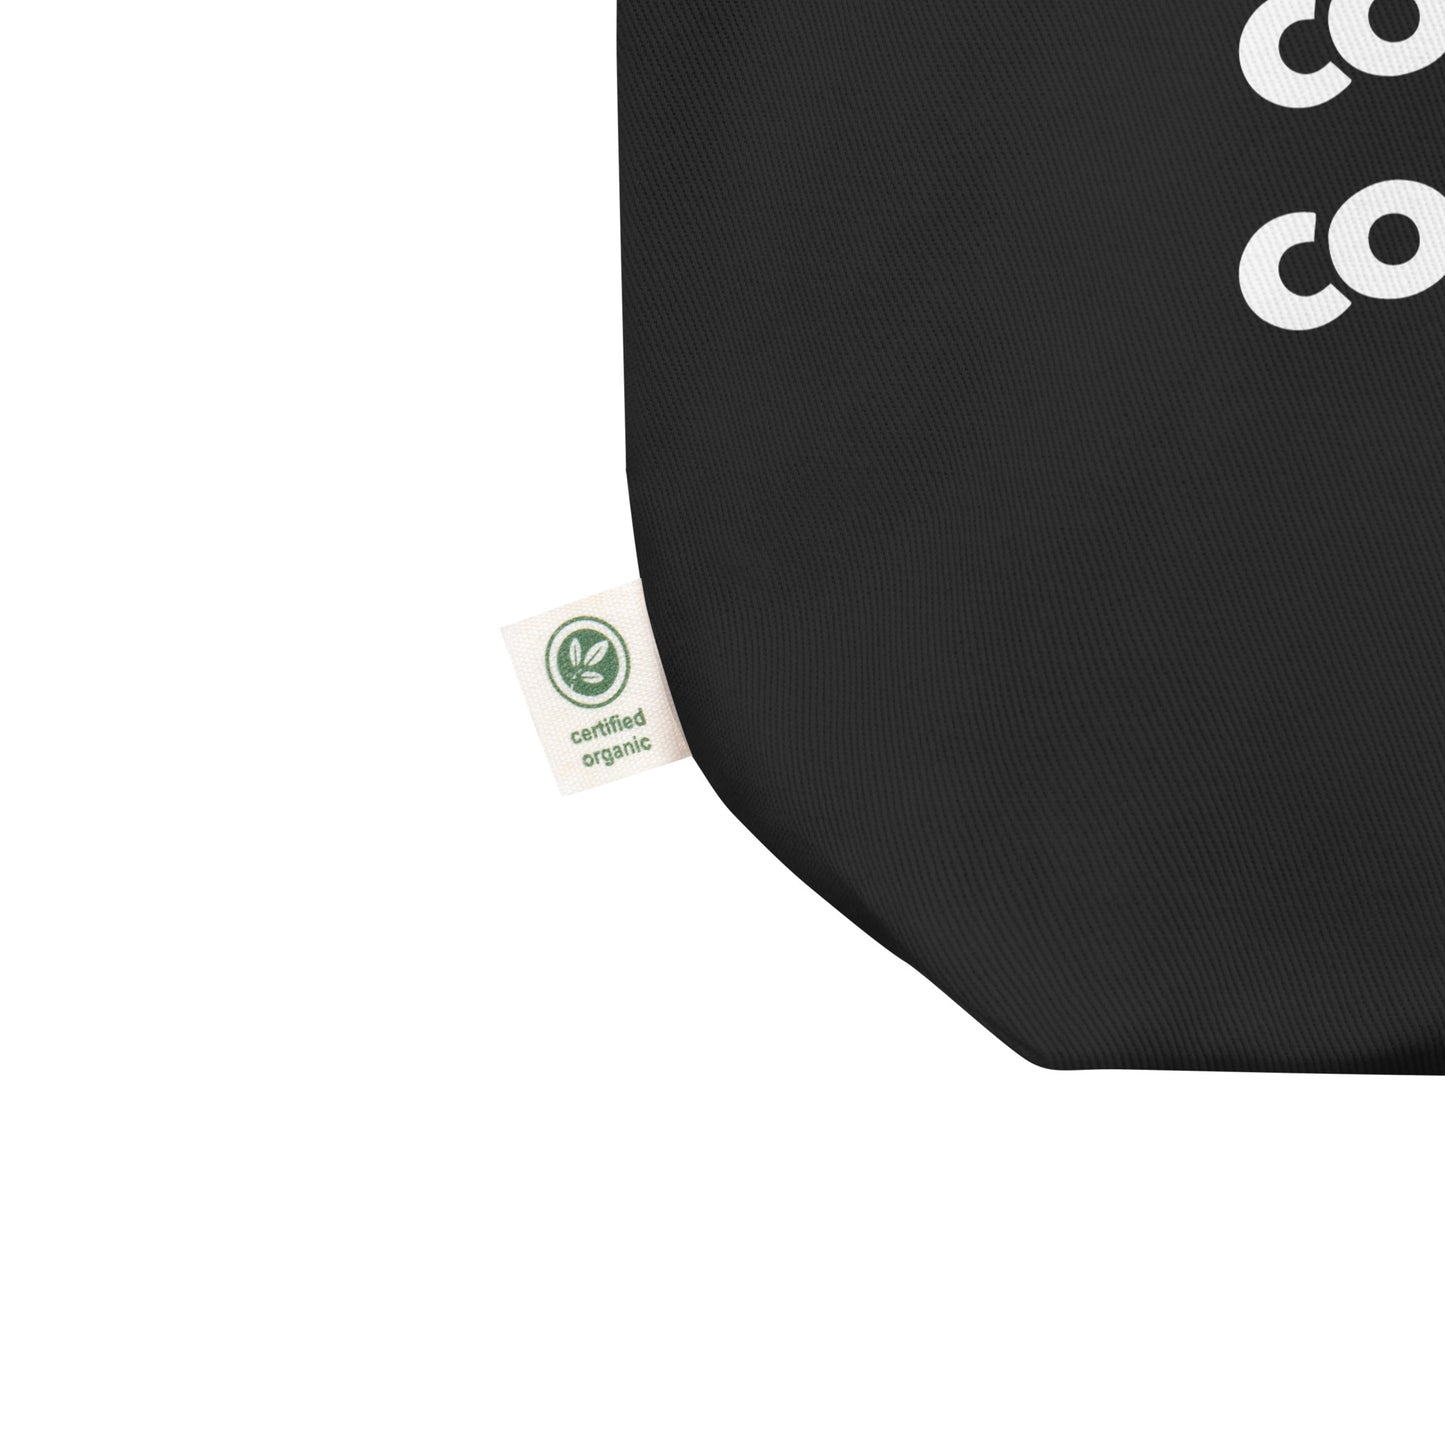 TCC - Eco Tote Bag [Major Label]